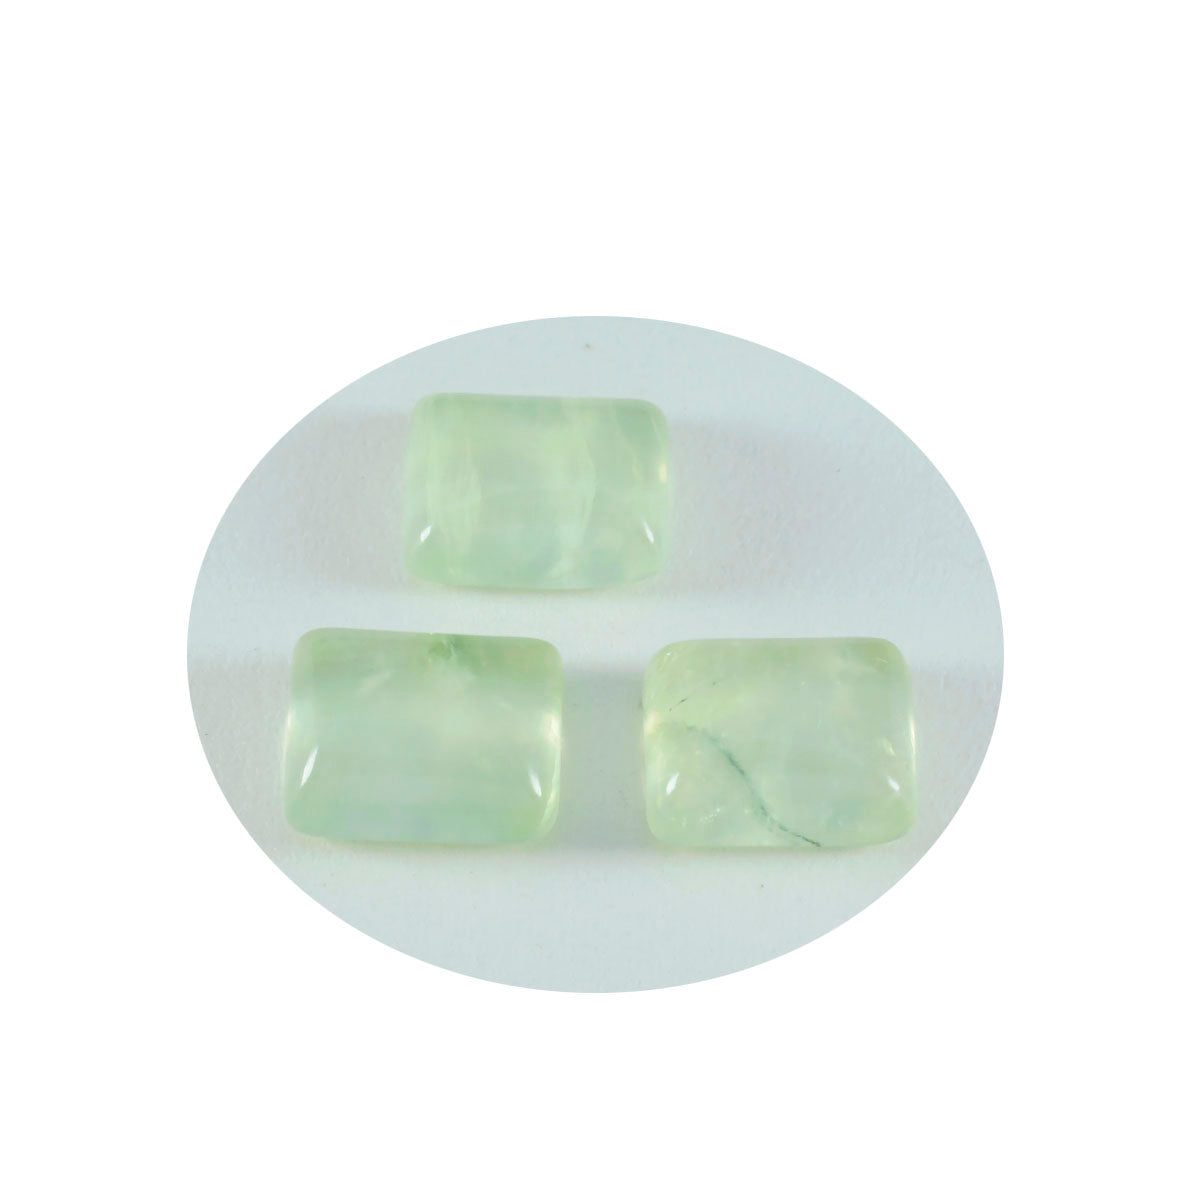 Riyogems 1PC Green Prehnite Cabochon 9x11 mm Octagon Shape A+1 Quality Stone